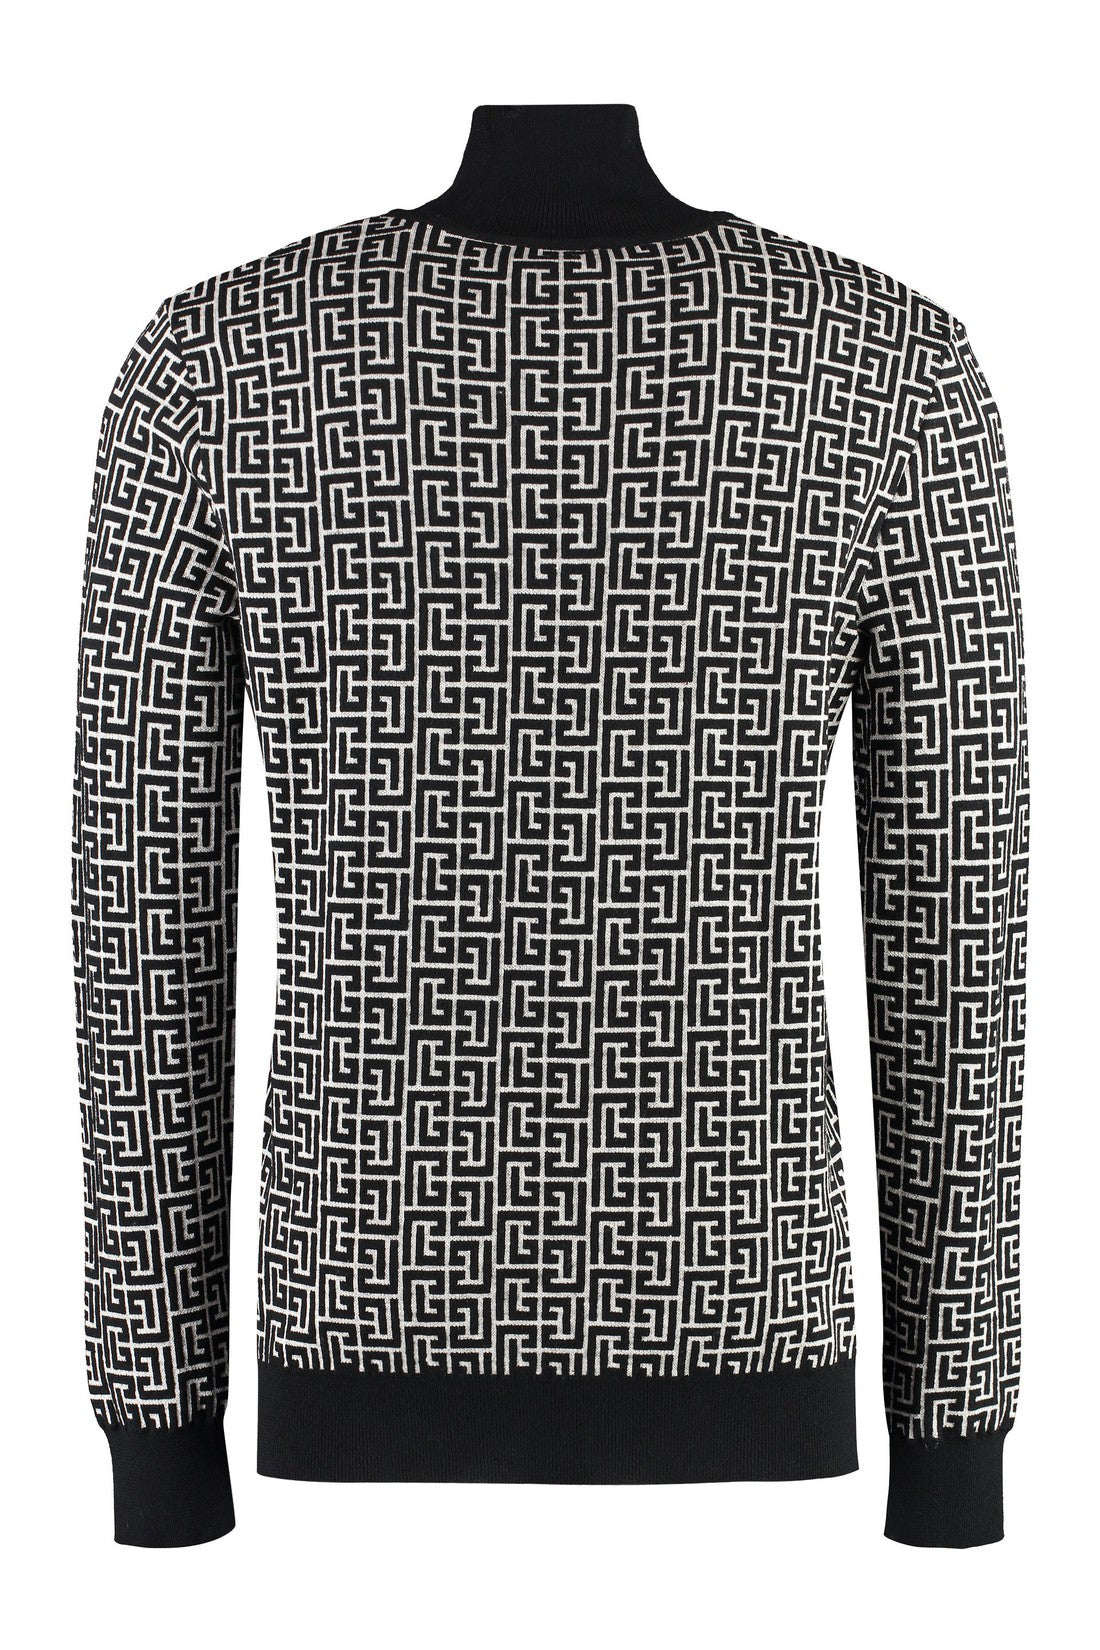 Balmain-OUTLET-SALE-Wool blend turtleneck sweater-ARCHIVIST